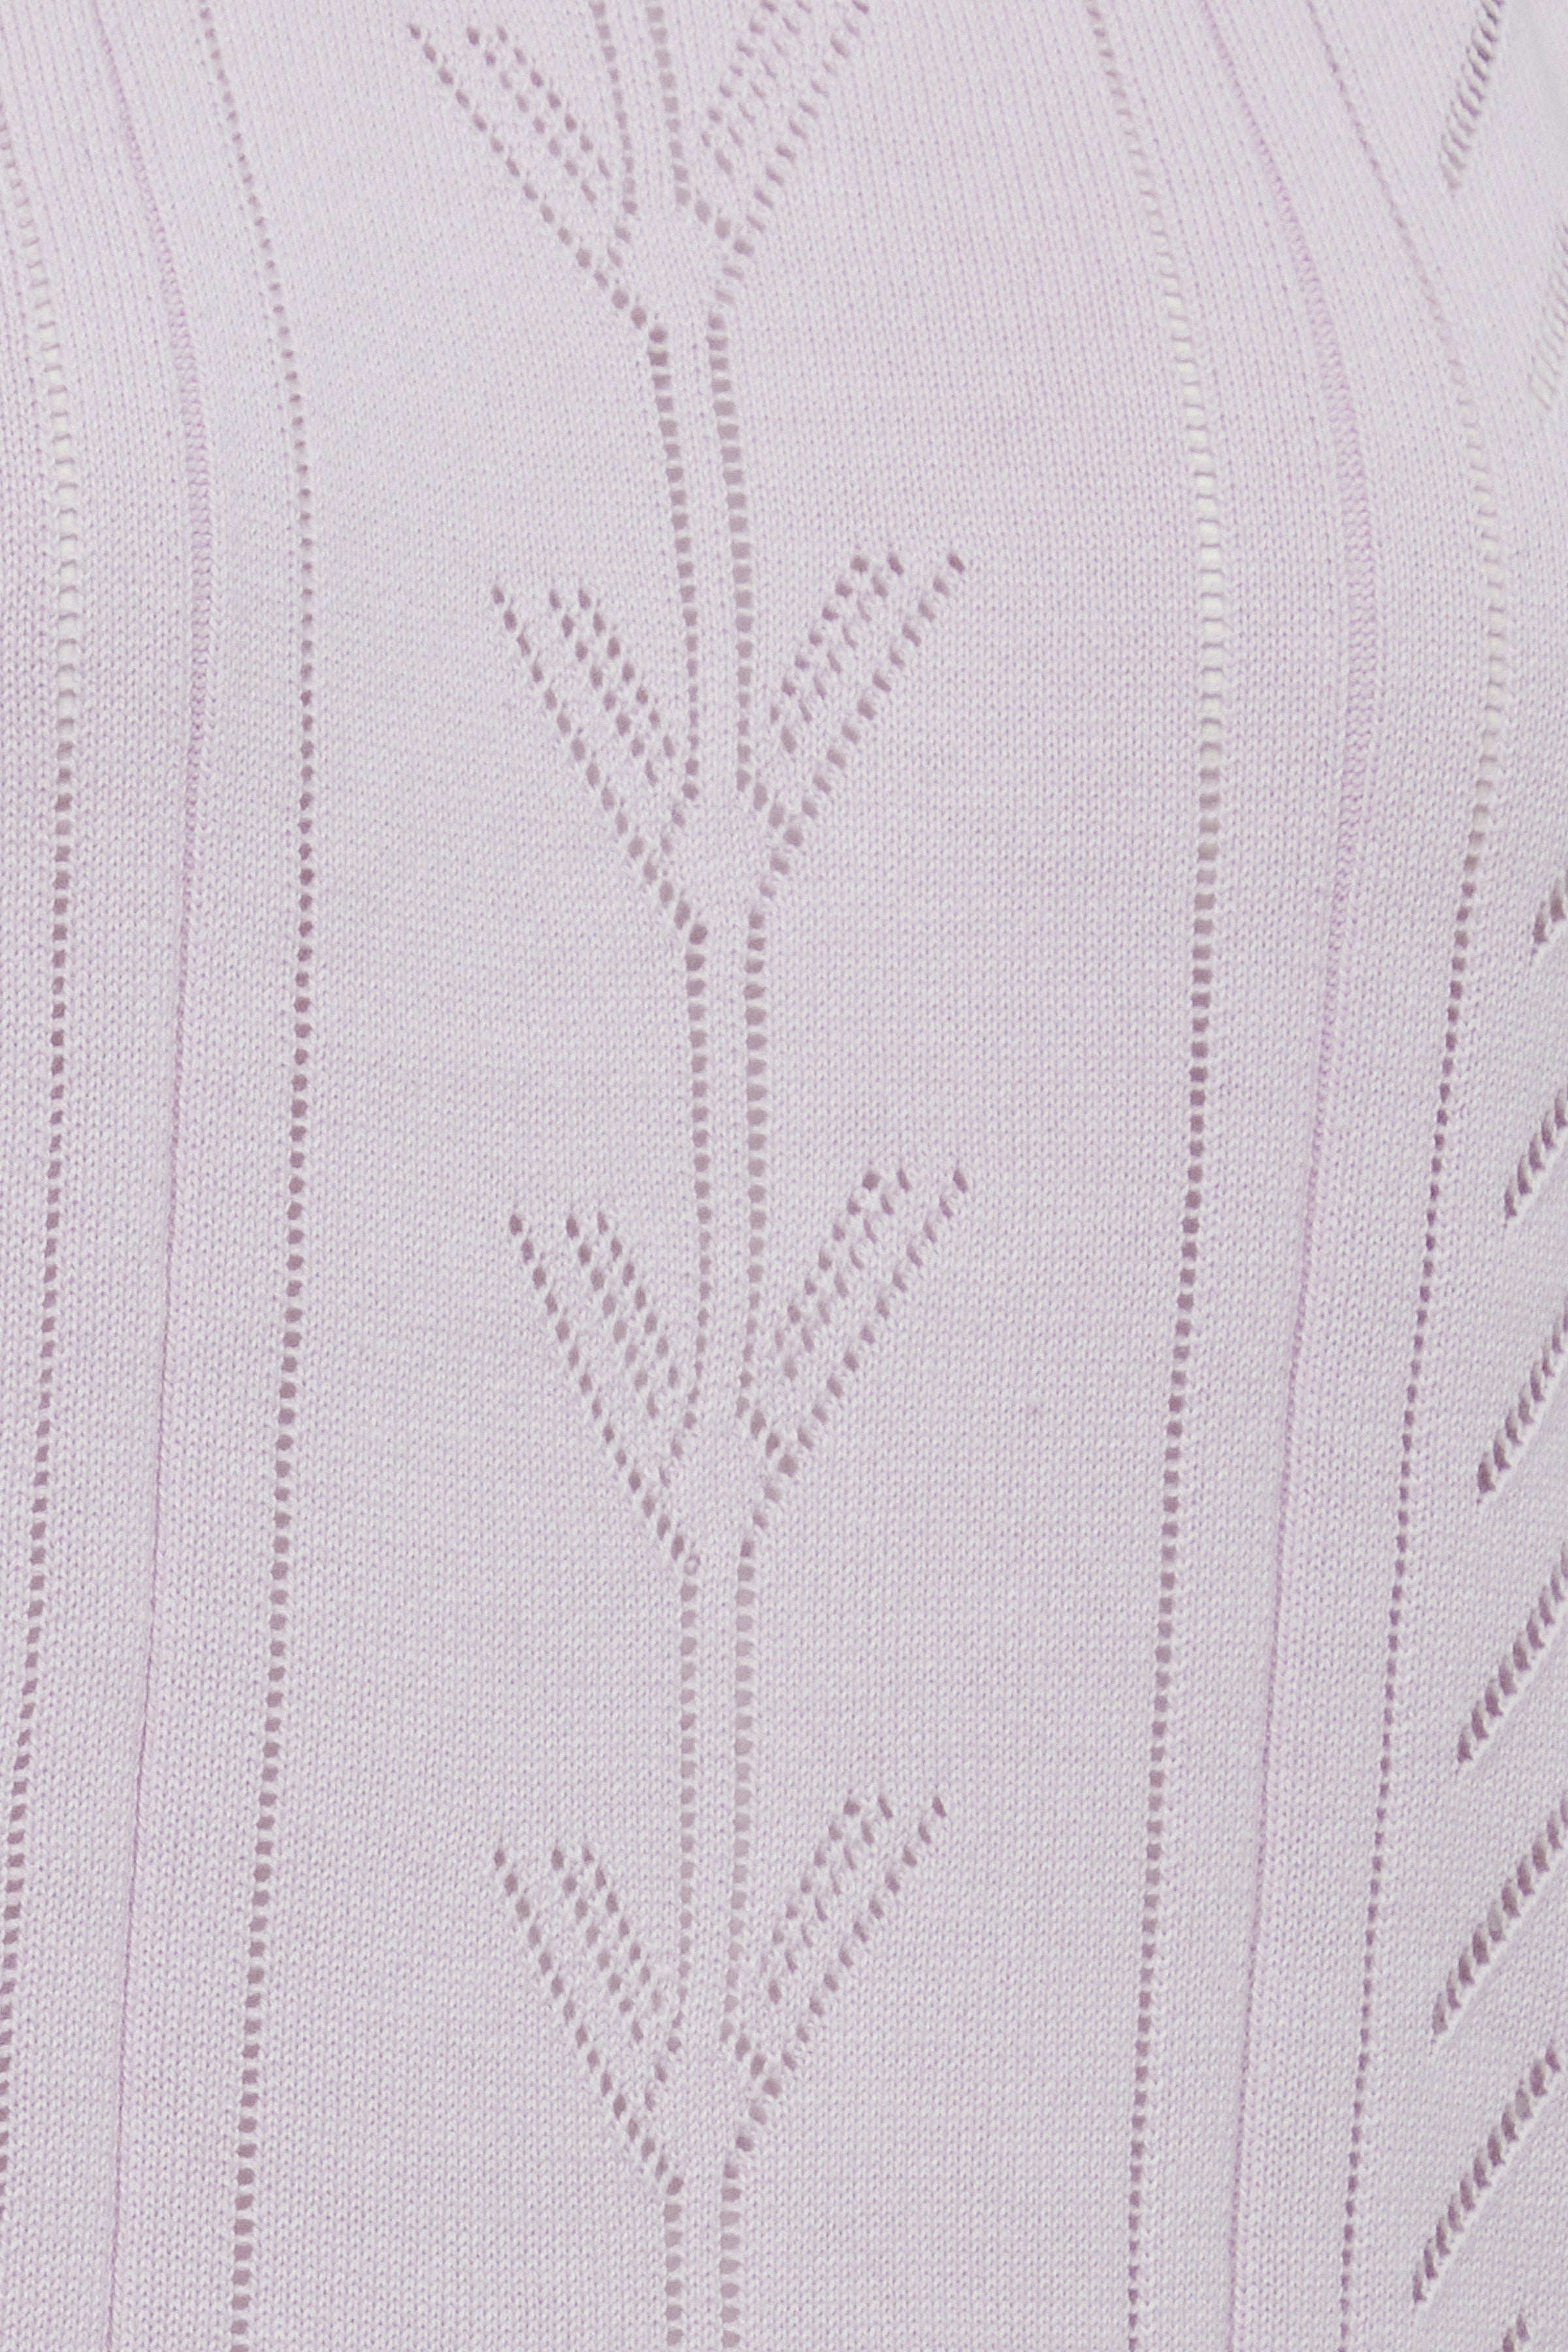 Perri Knitted Top (Lavender Fog)